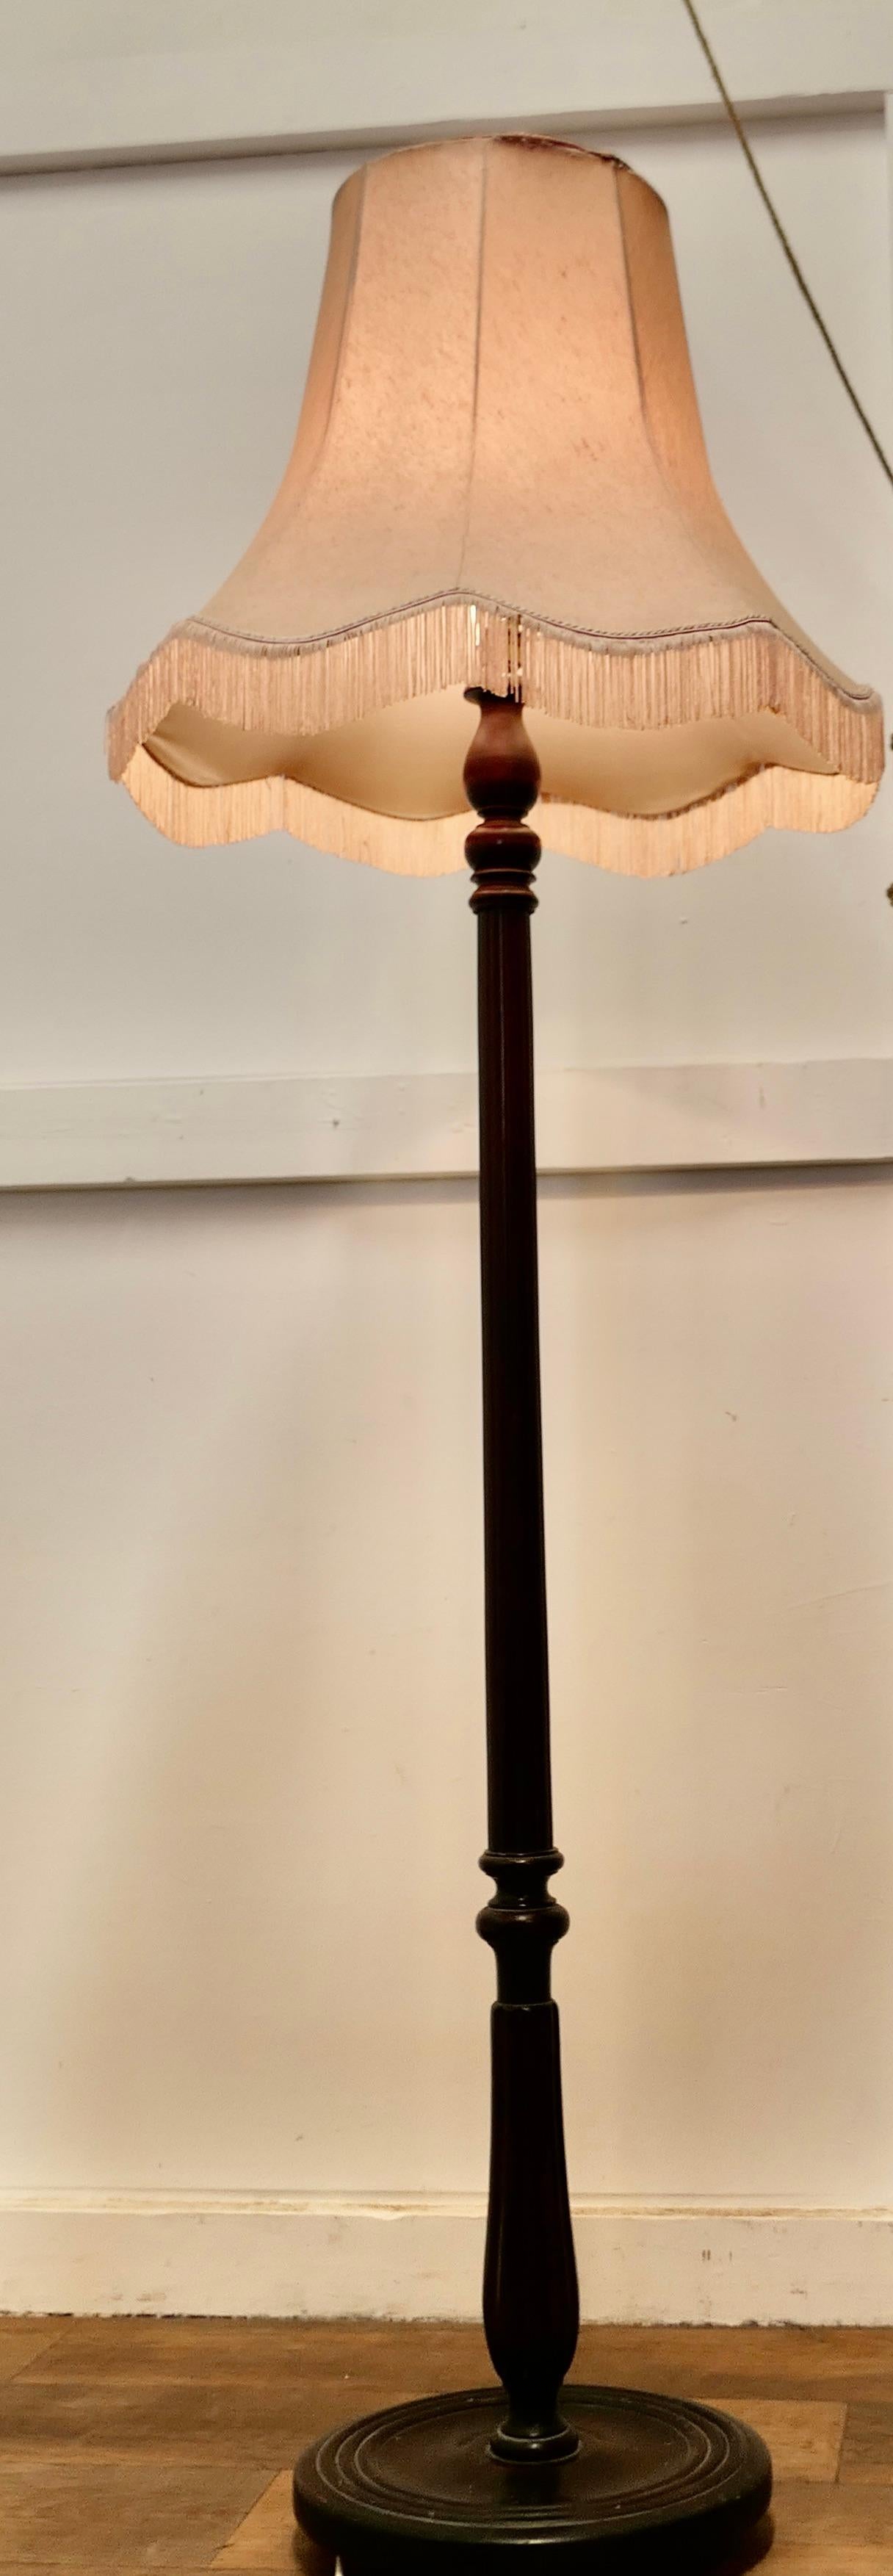 Mid-20th Century Art Deco Standard or Floor Lamp     For Sale